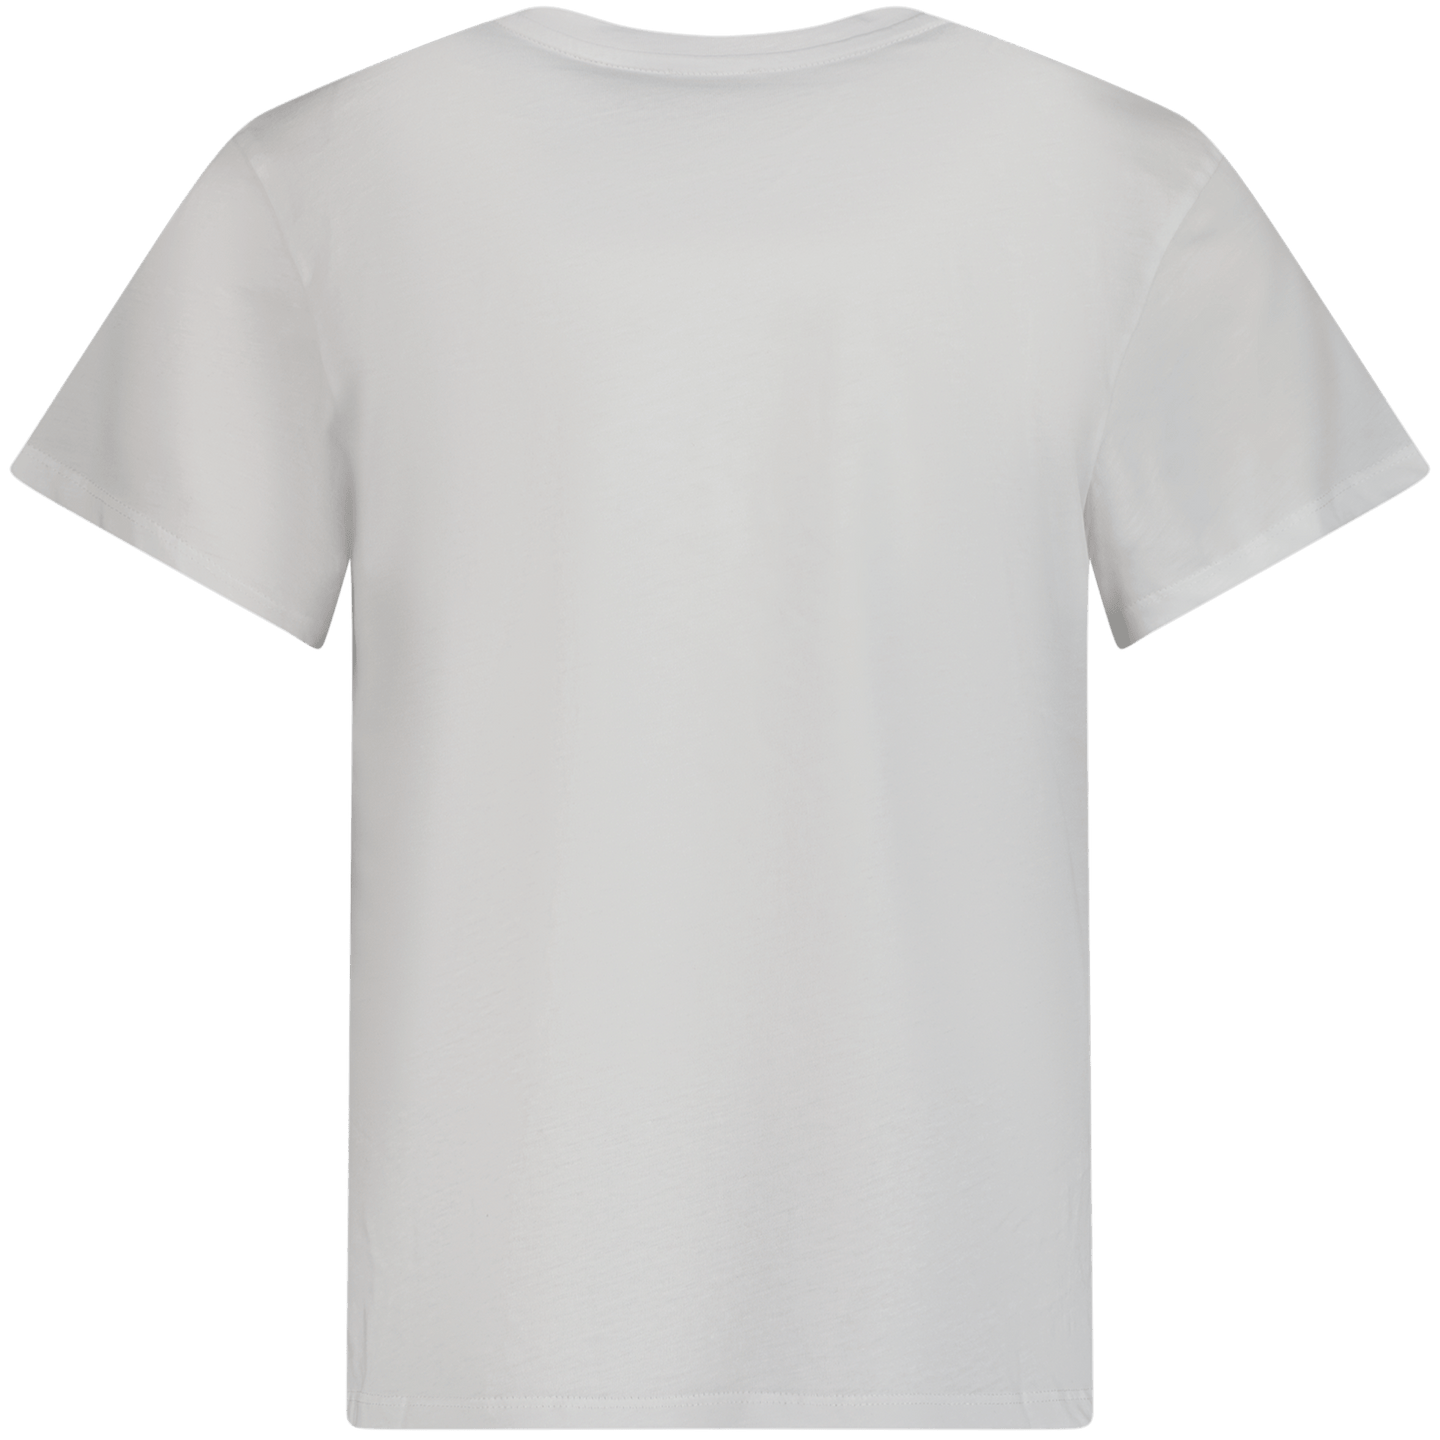 Givenchy Kinder Meisjes T-Shirt Wit 4Y